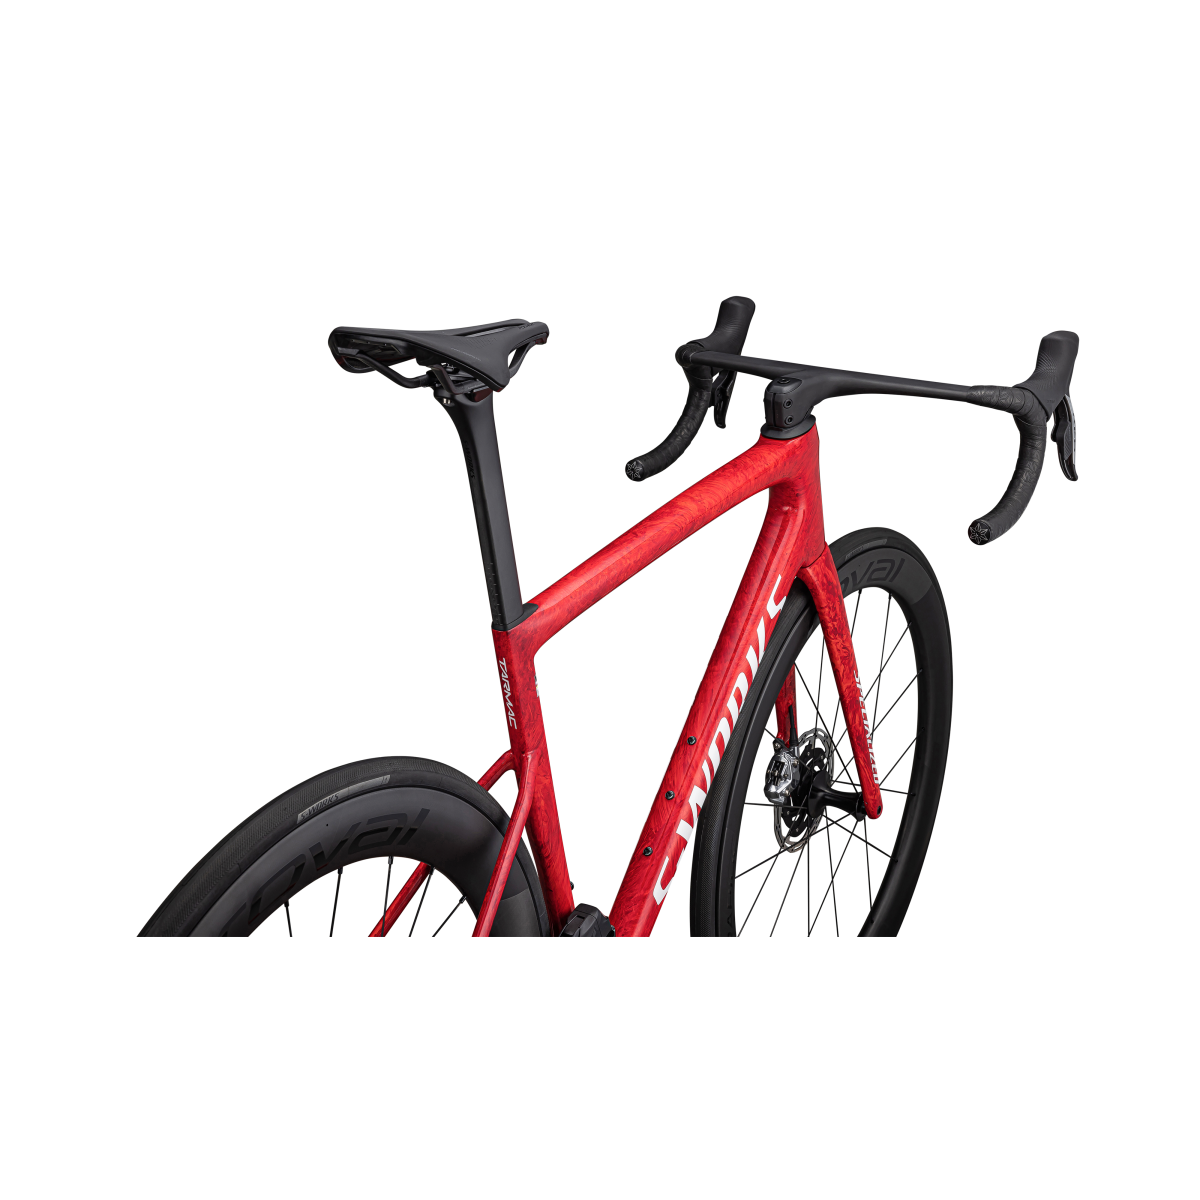 S-Works Tarmac SL8 - SRAM Red eTap AXS plento dviratis / Gloss Red Sky - Fiery Red Strata